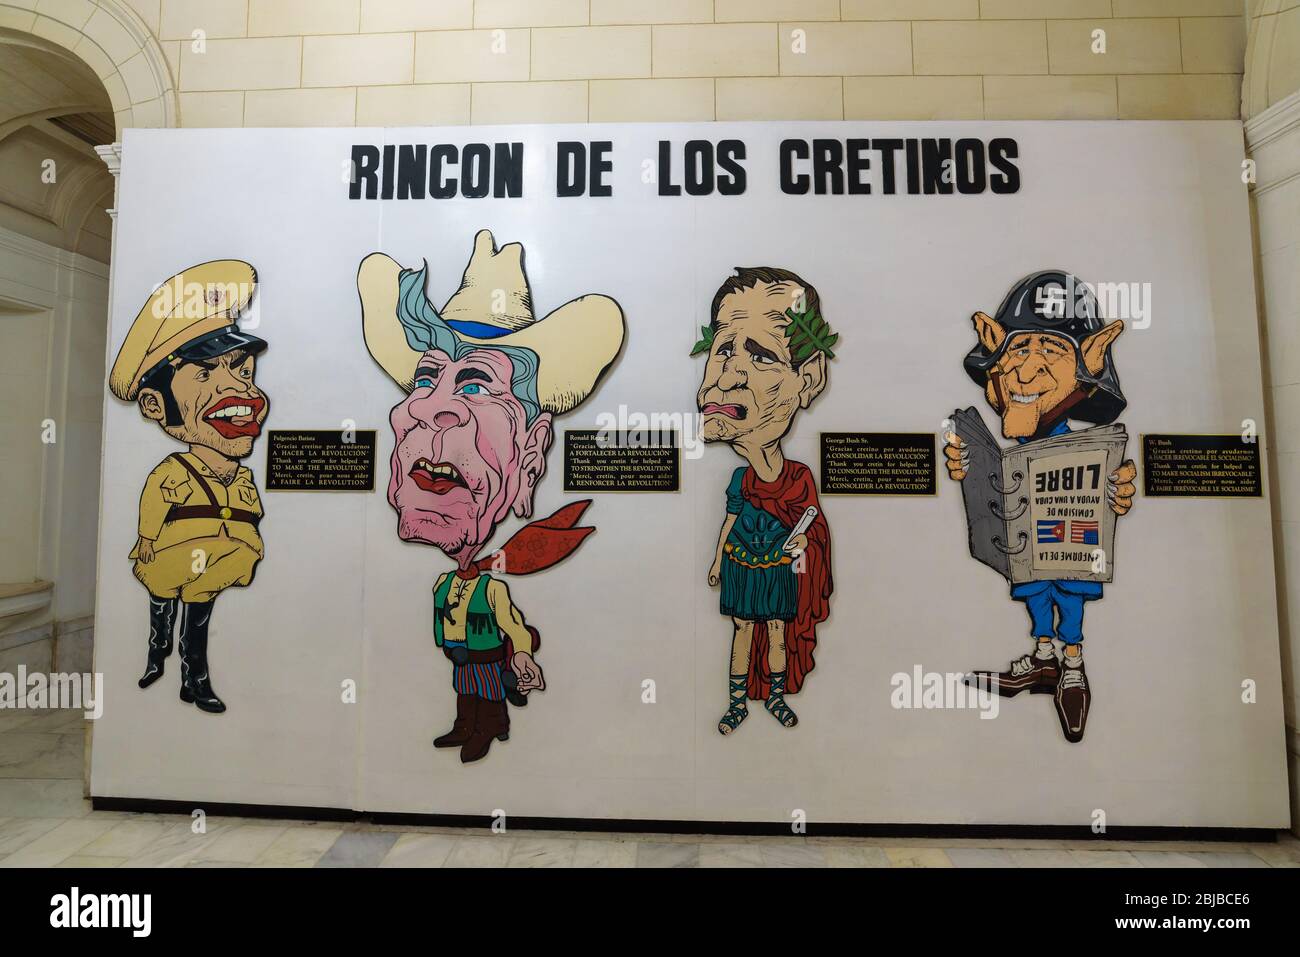 The Rincon de los Cretinos (Corner of Cretins) takes aim at former Cuban leader Fulgencio Batista, former presidents Ronald Reagan, George H.W. Bush. Stock Photo